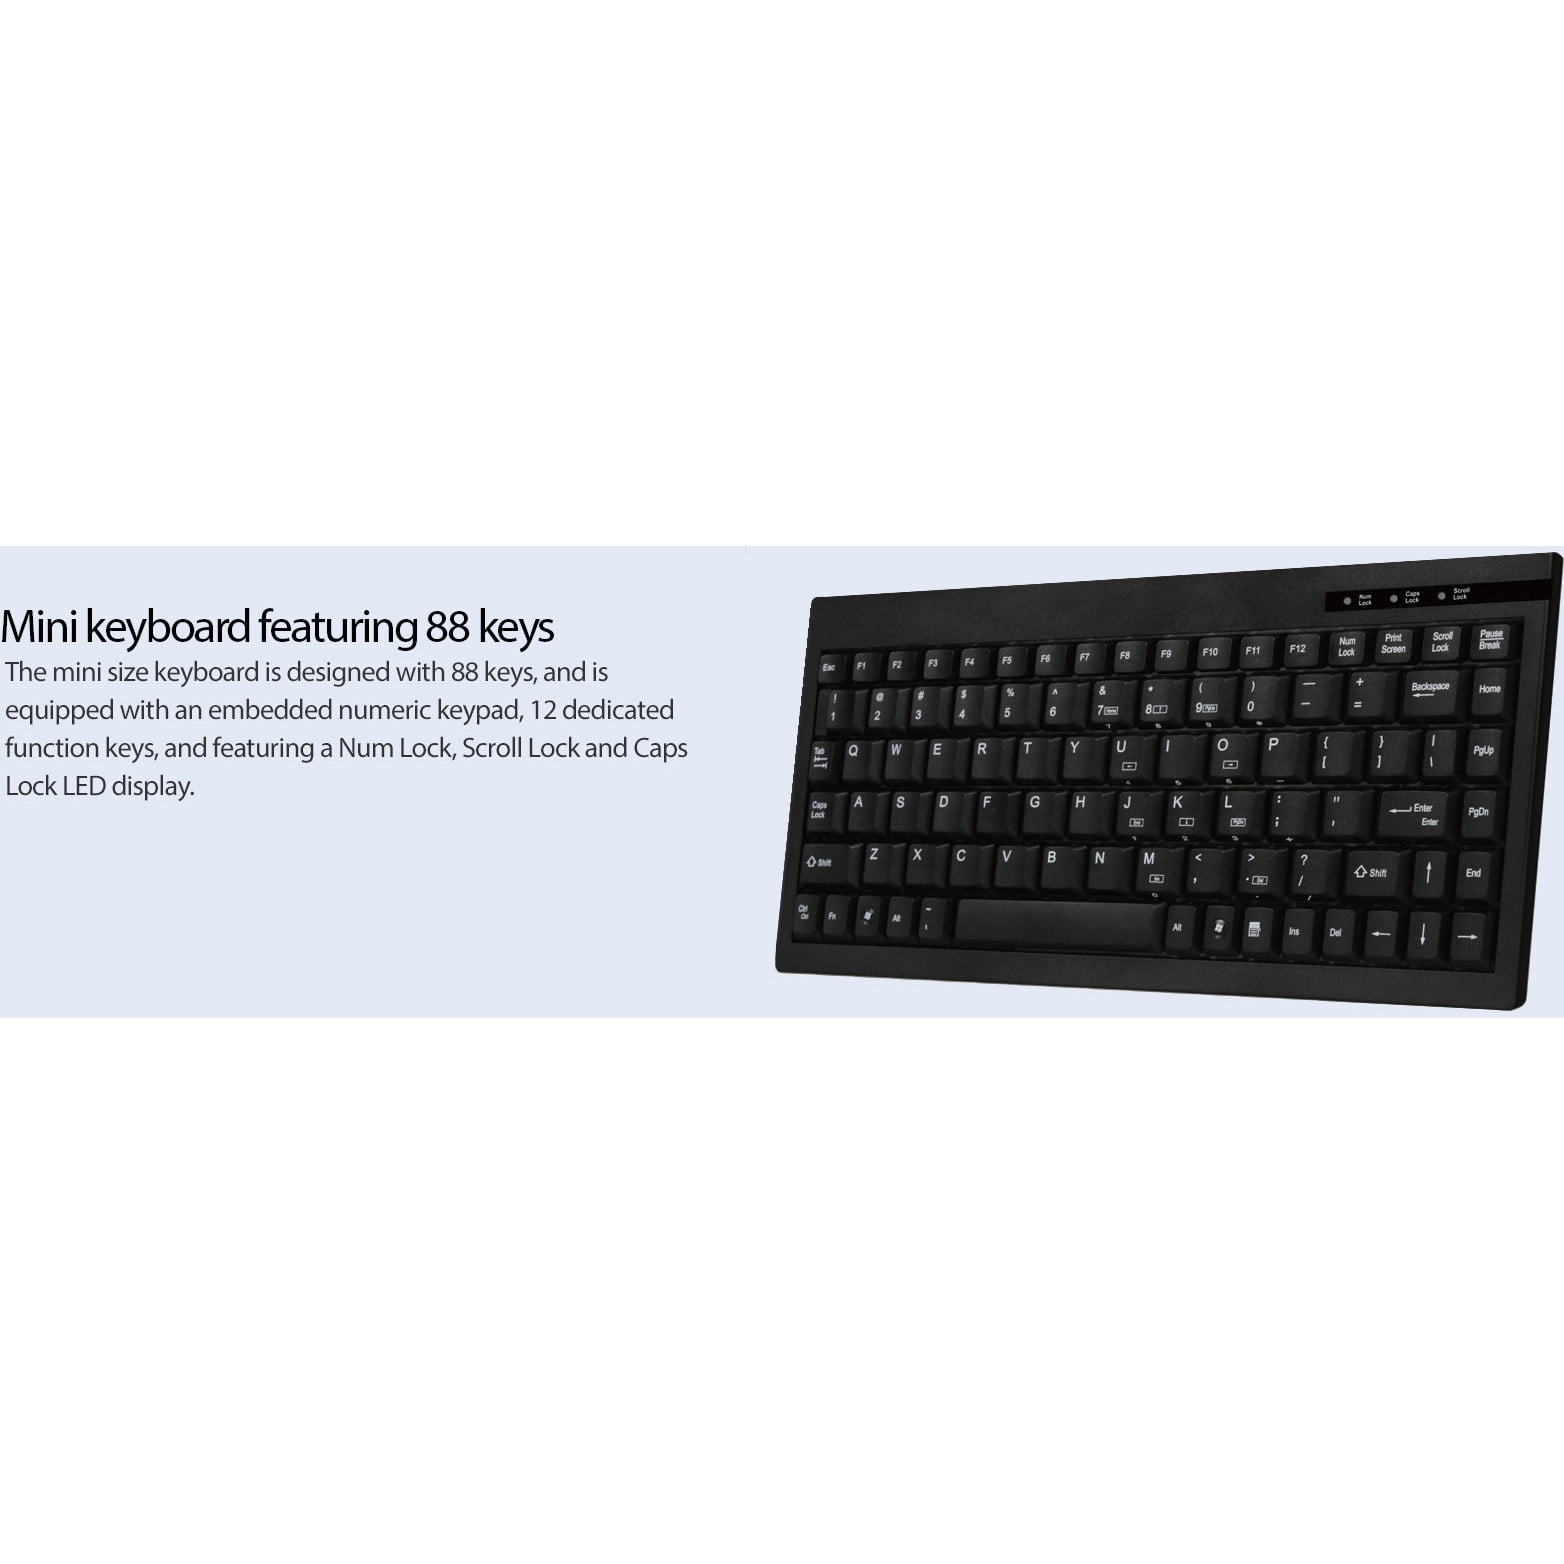 Adesso Mini Keyboard with Embedded Numeric Keypad ACK-595 Keyboard